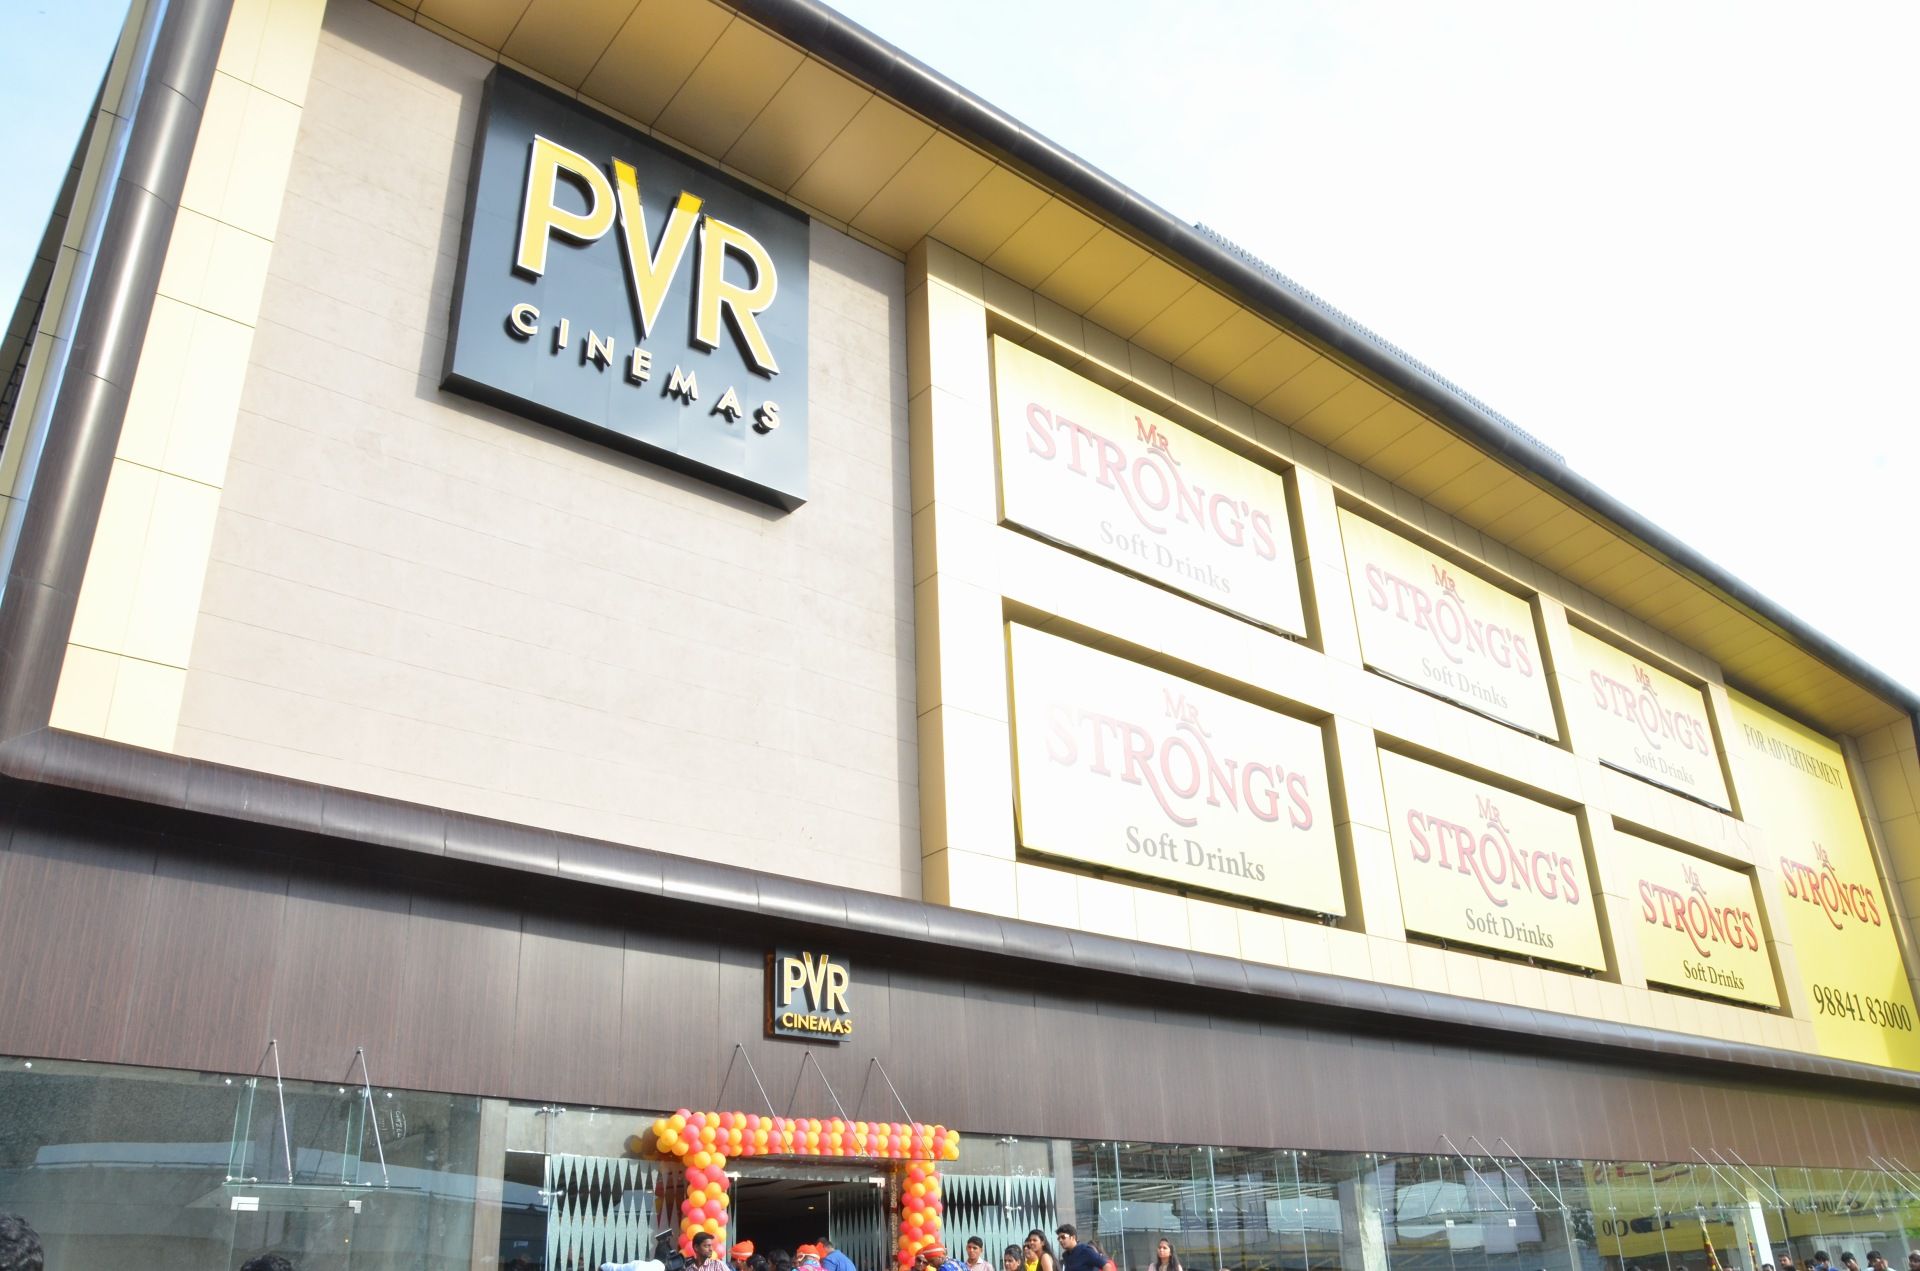 PVR Cinema Launch Images (15)